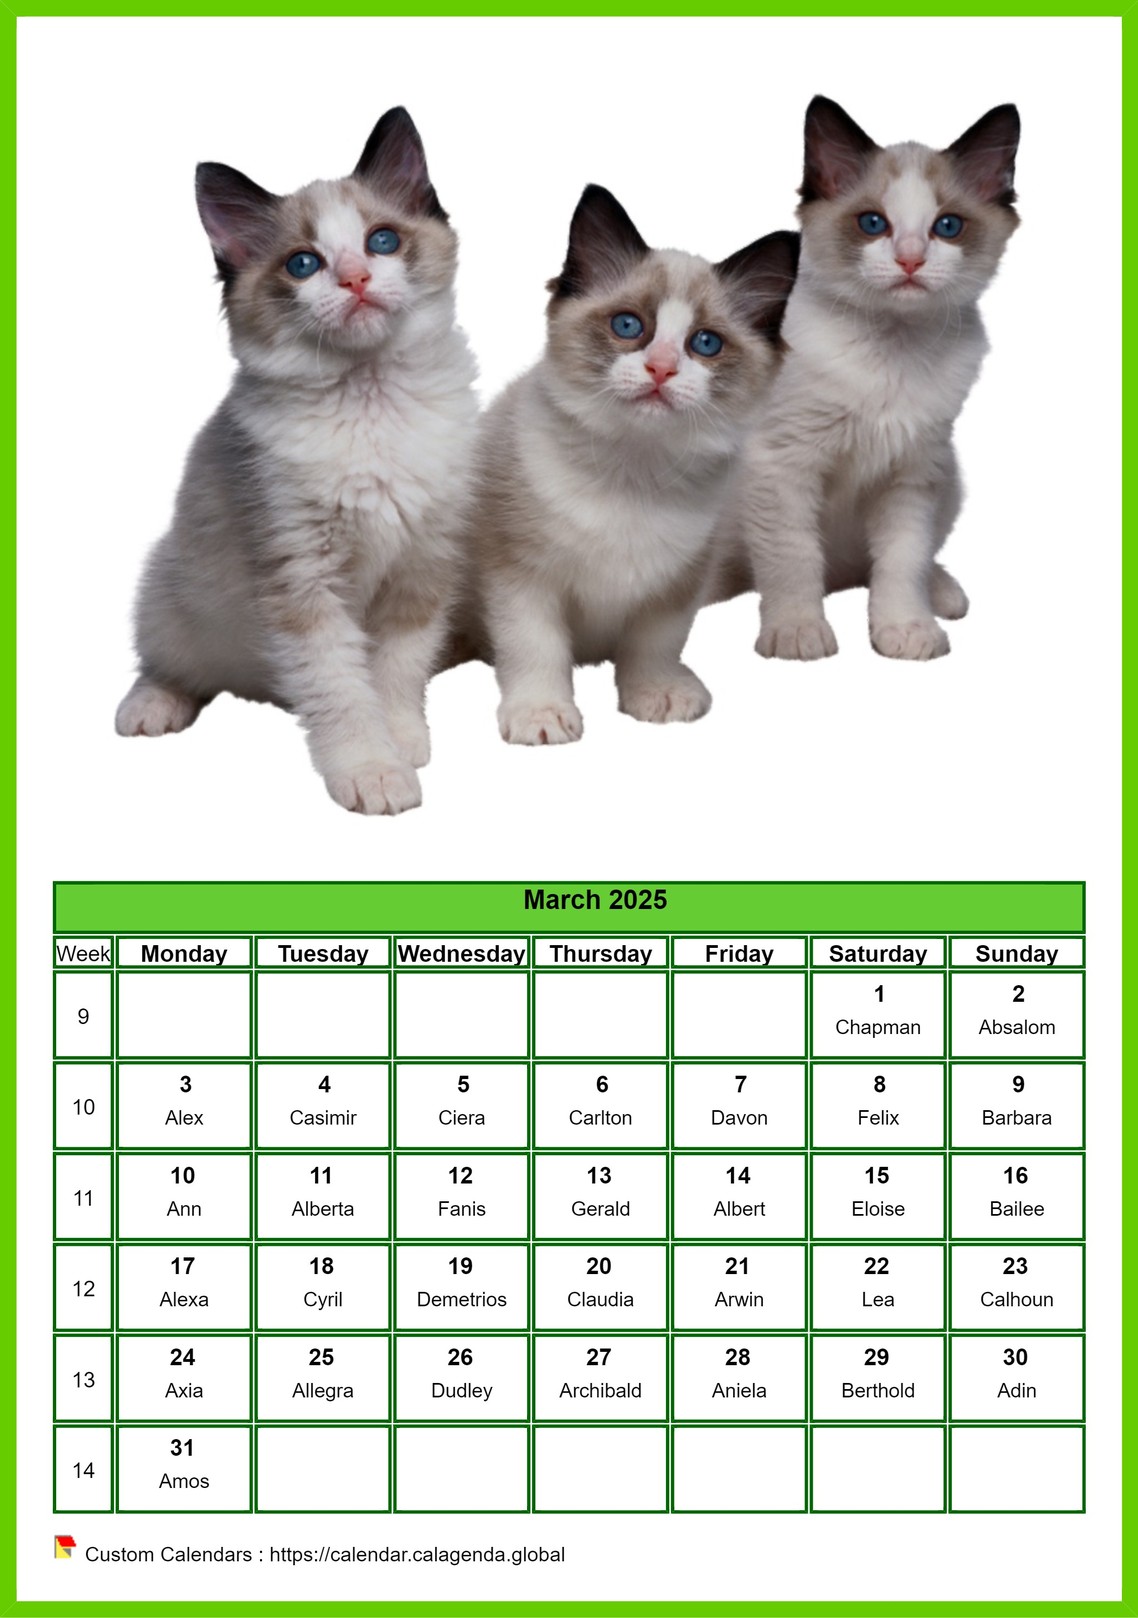 Calendar March 2025 cats